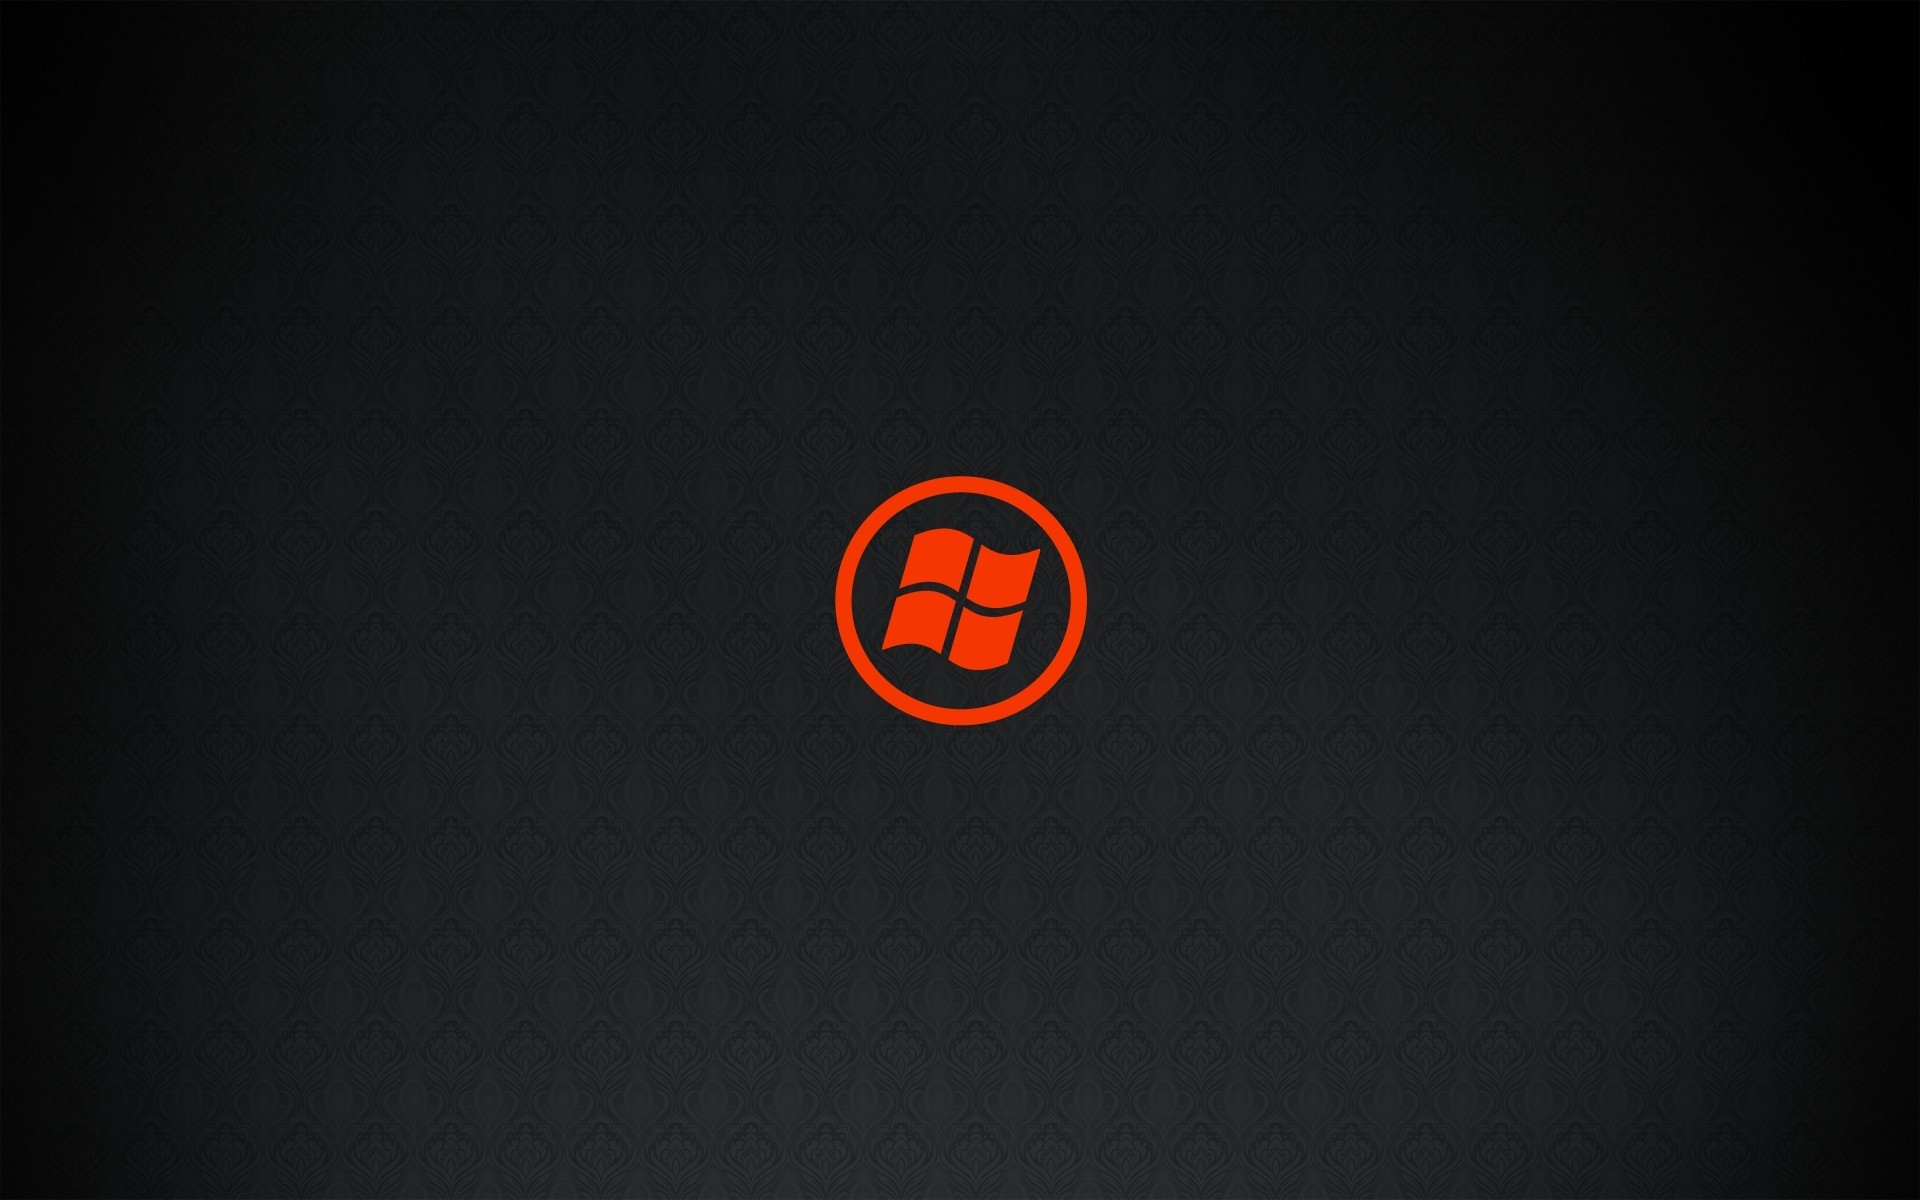 Windows logo wallpaper 9545